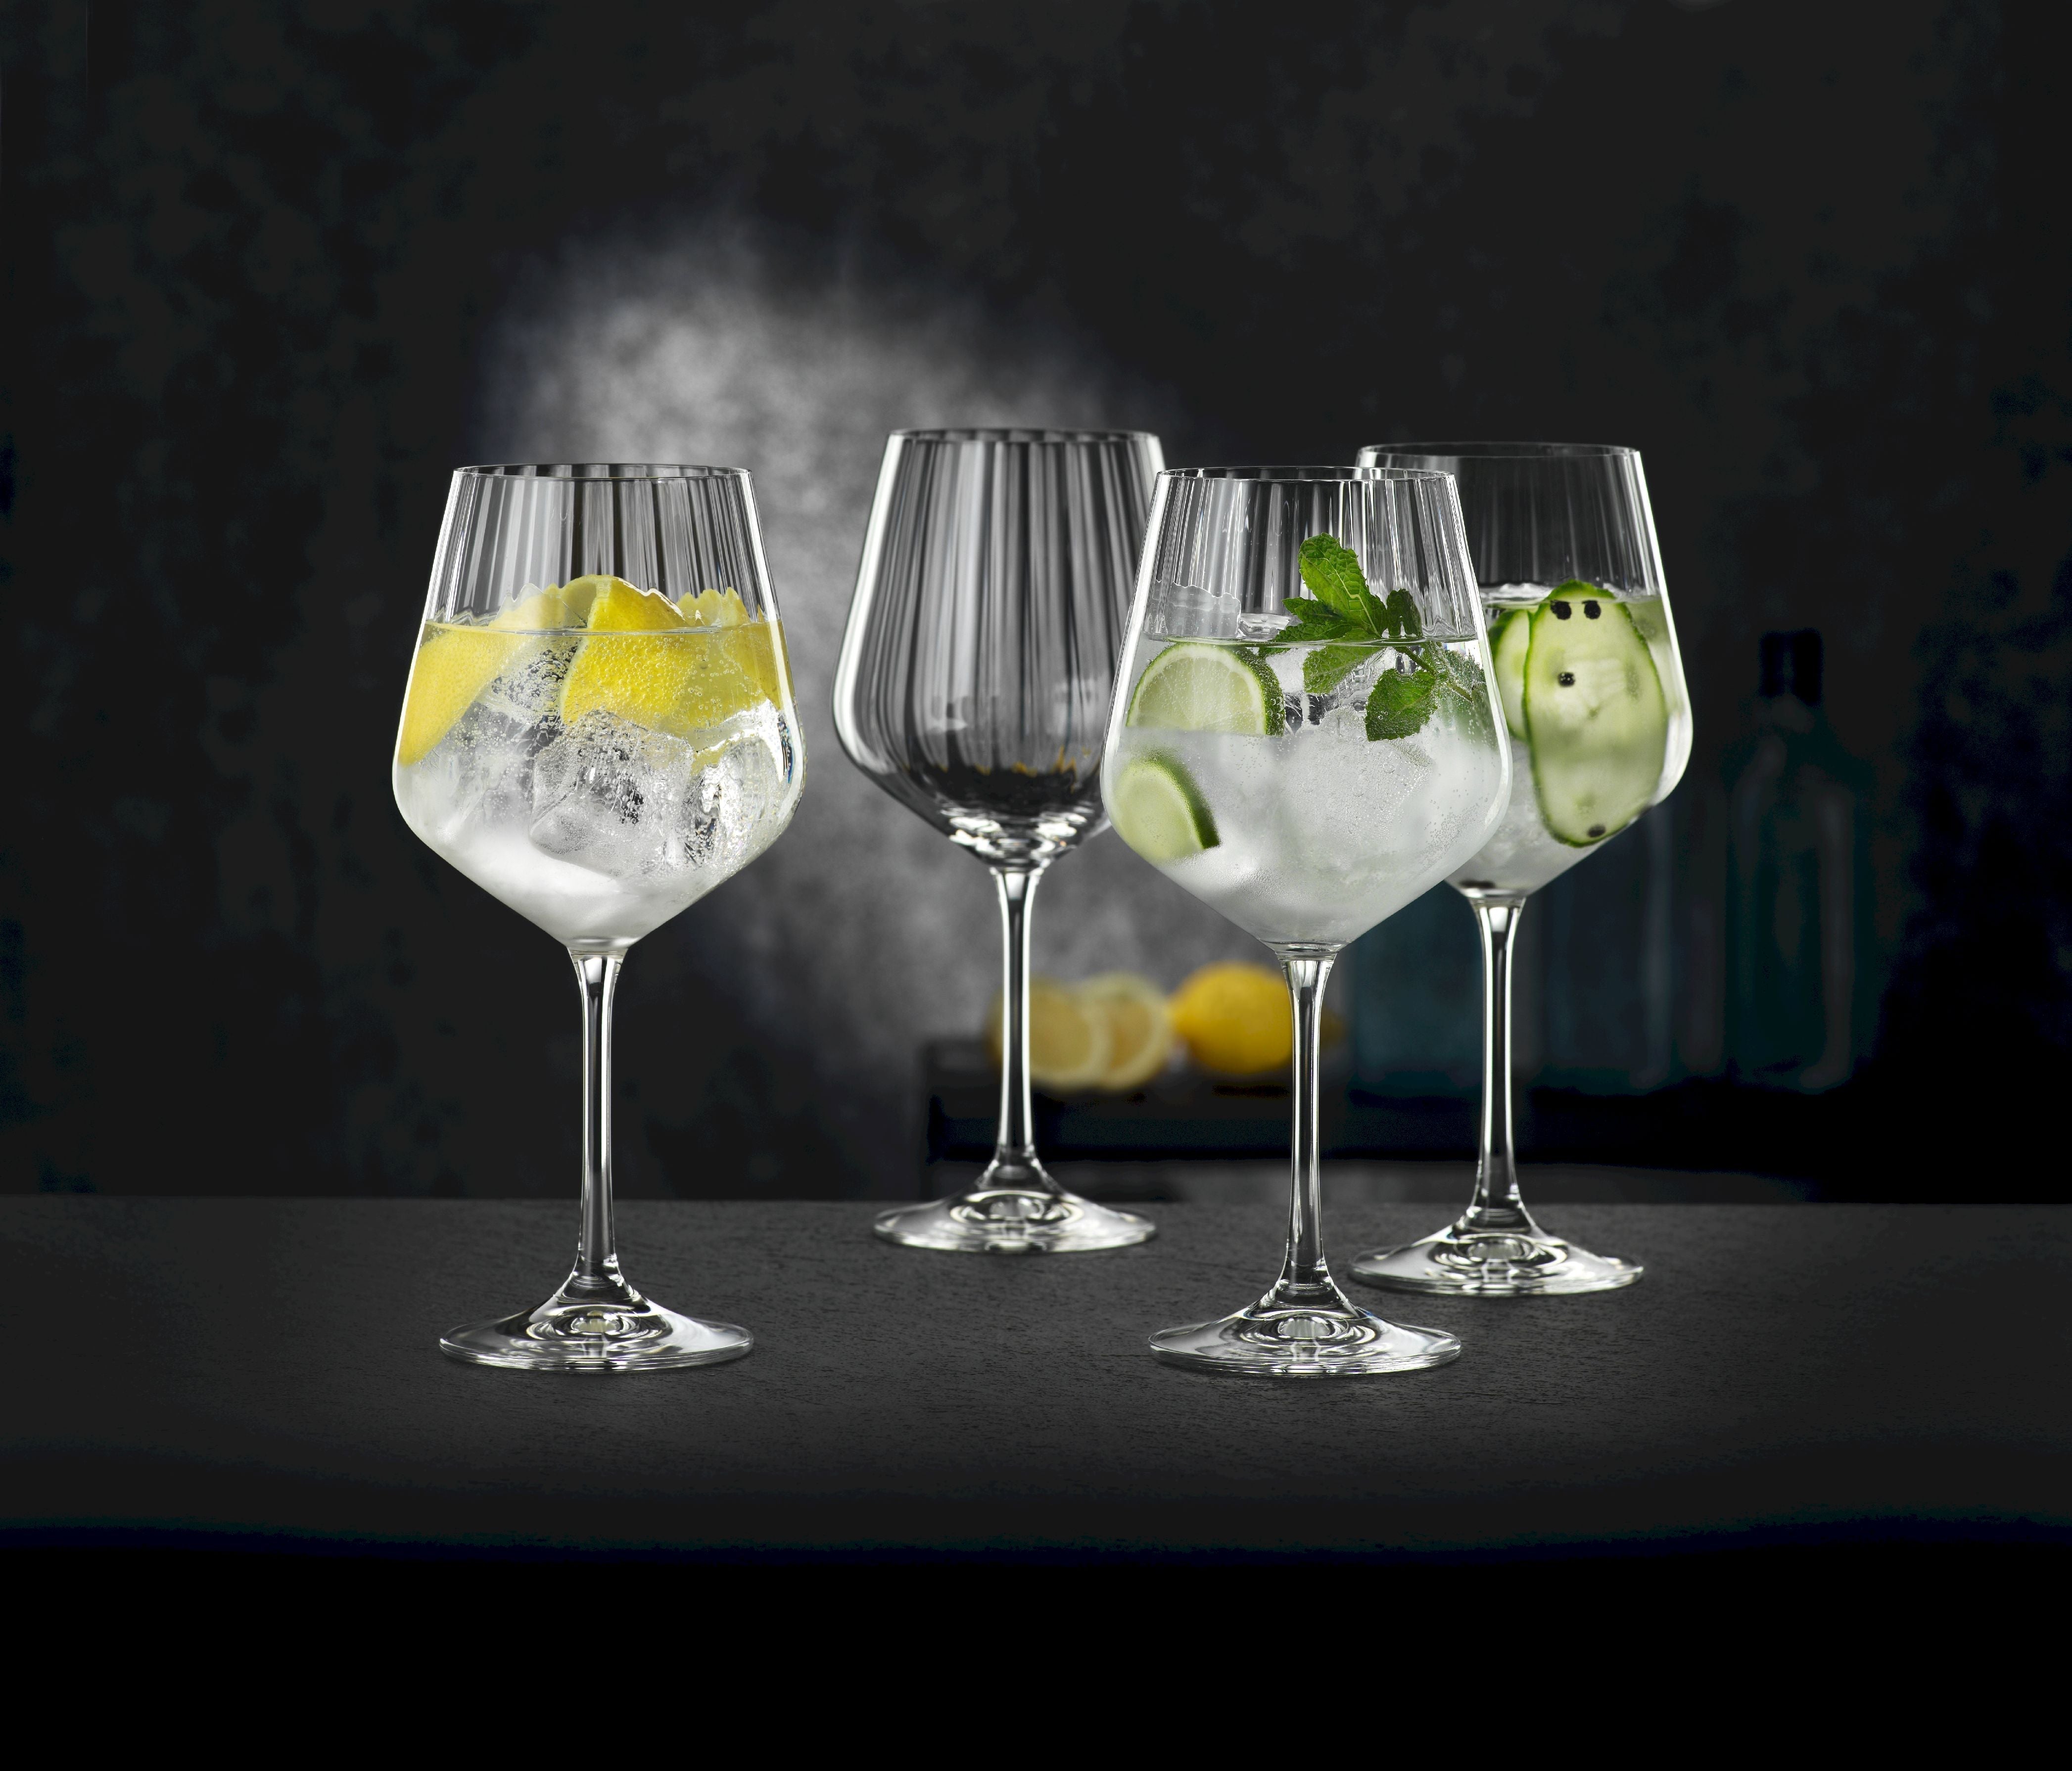 Nachtmann Gin & Tonic Glass 640 Ml, Set Of 4